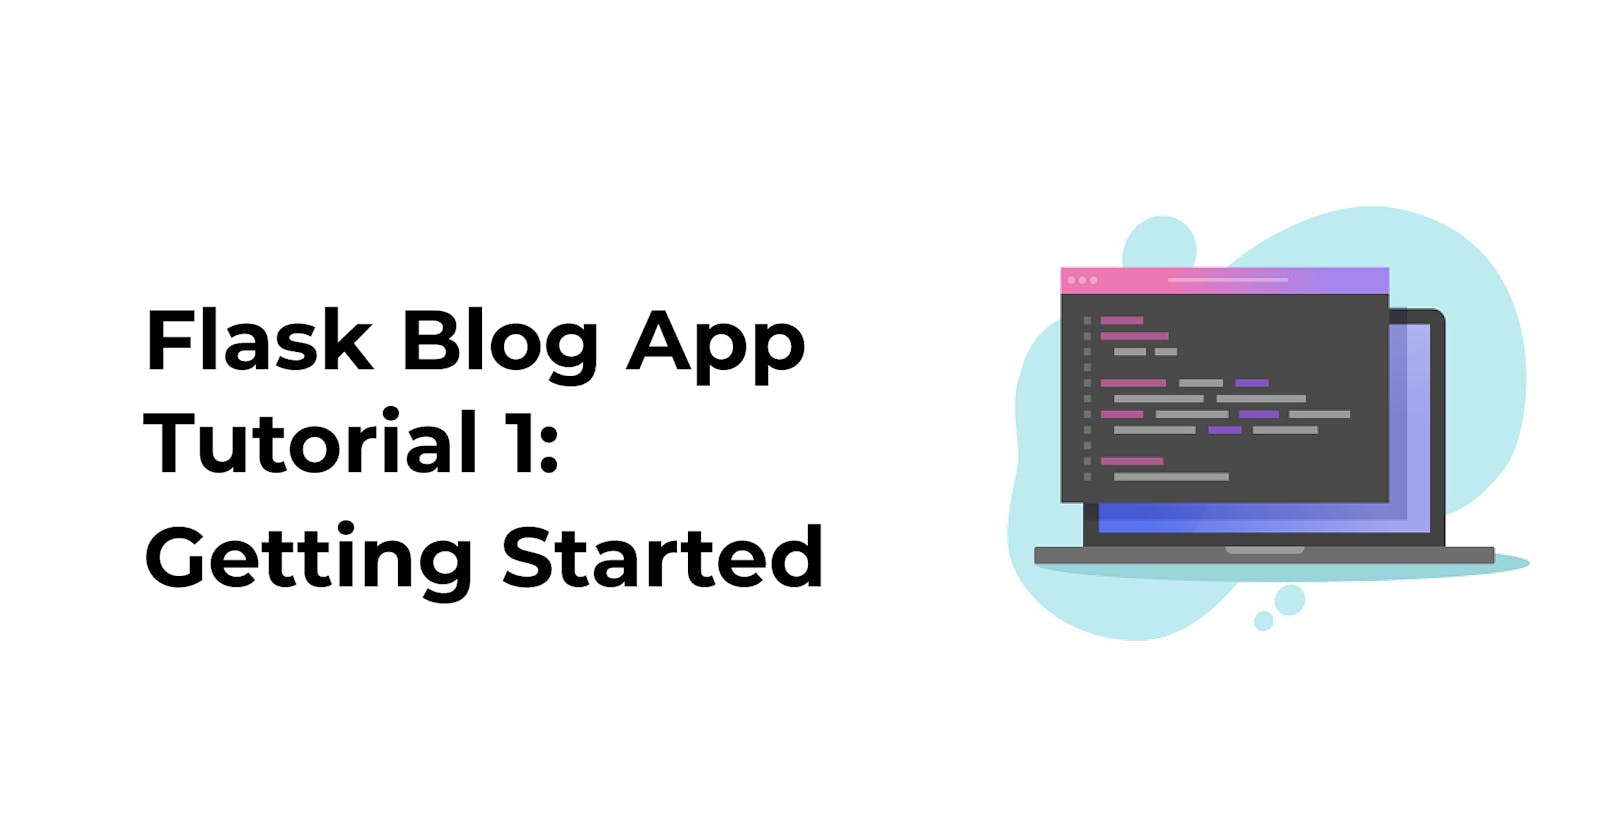 Flask Blog App Tutorial 1: Getting Started